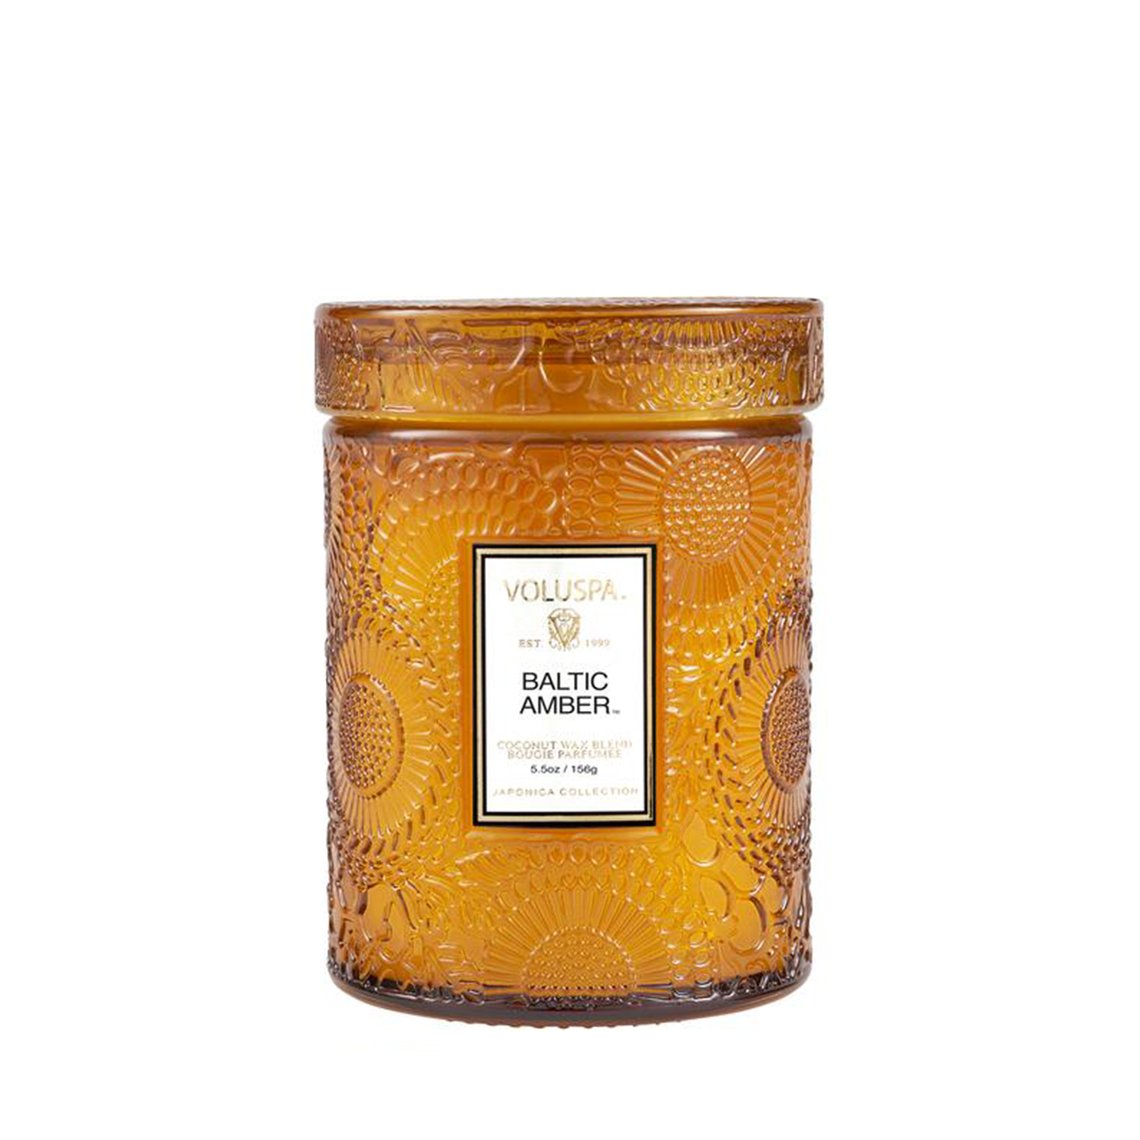 VOLUSPA Baltic Amber 50hr Glass Candle + Lid.